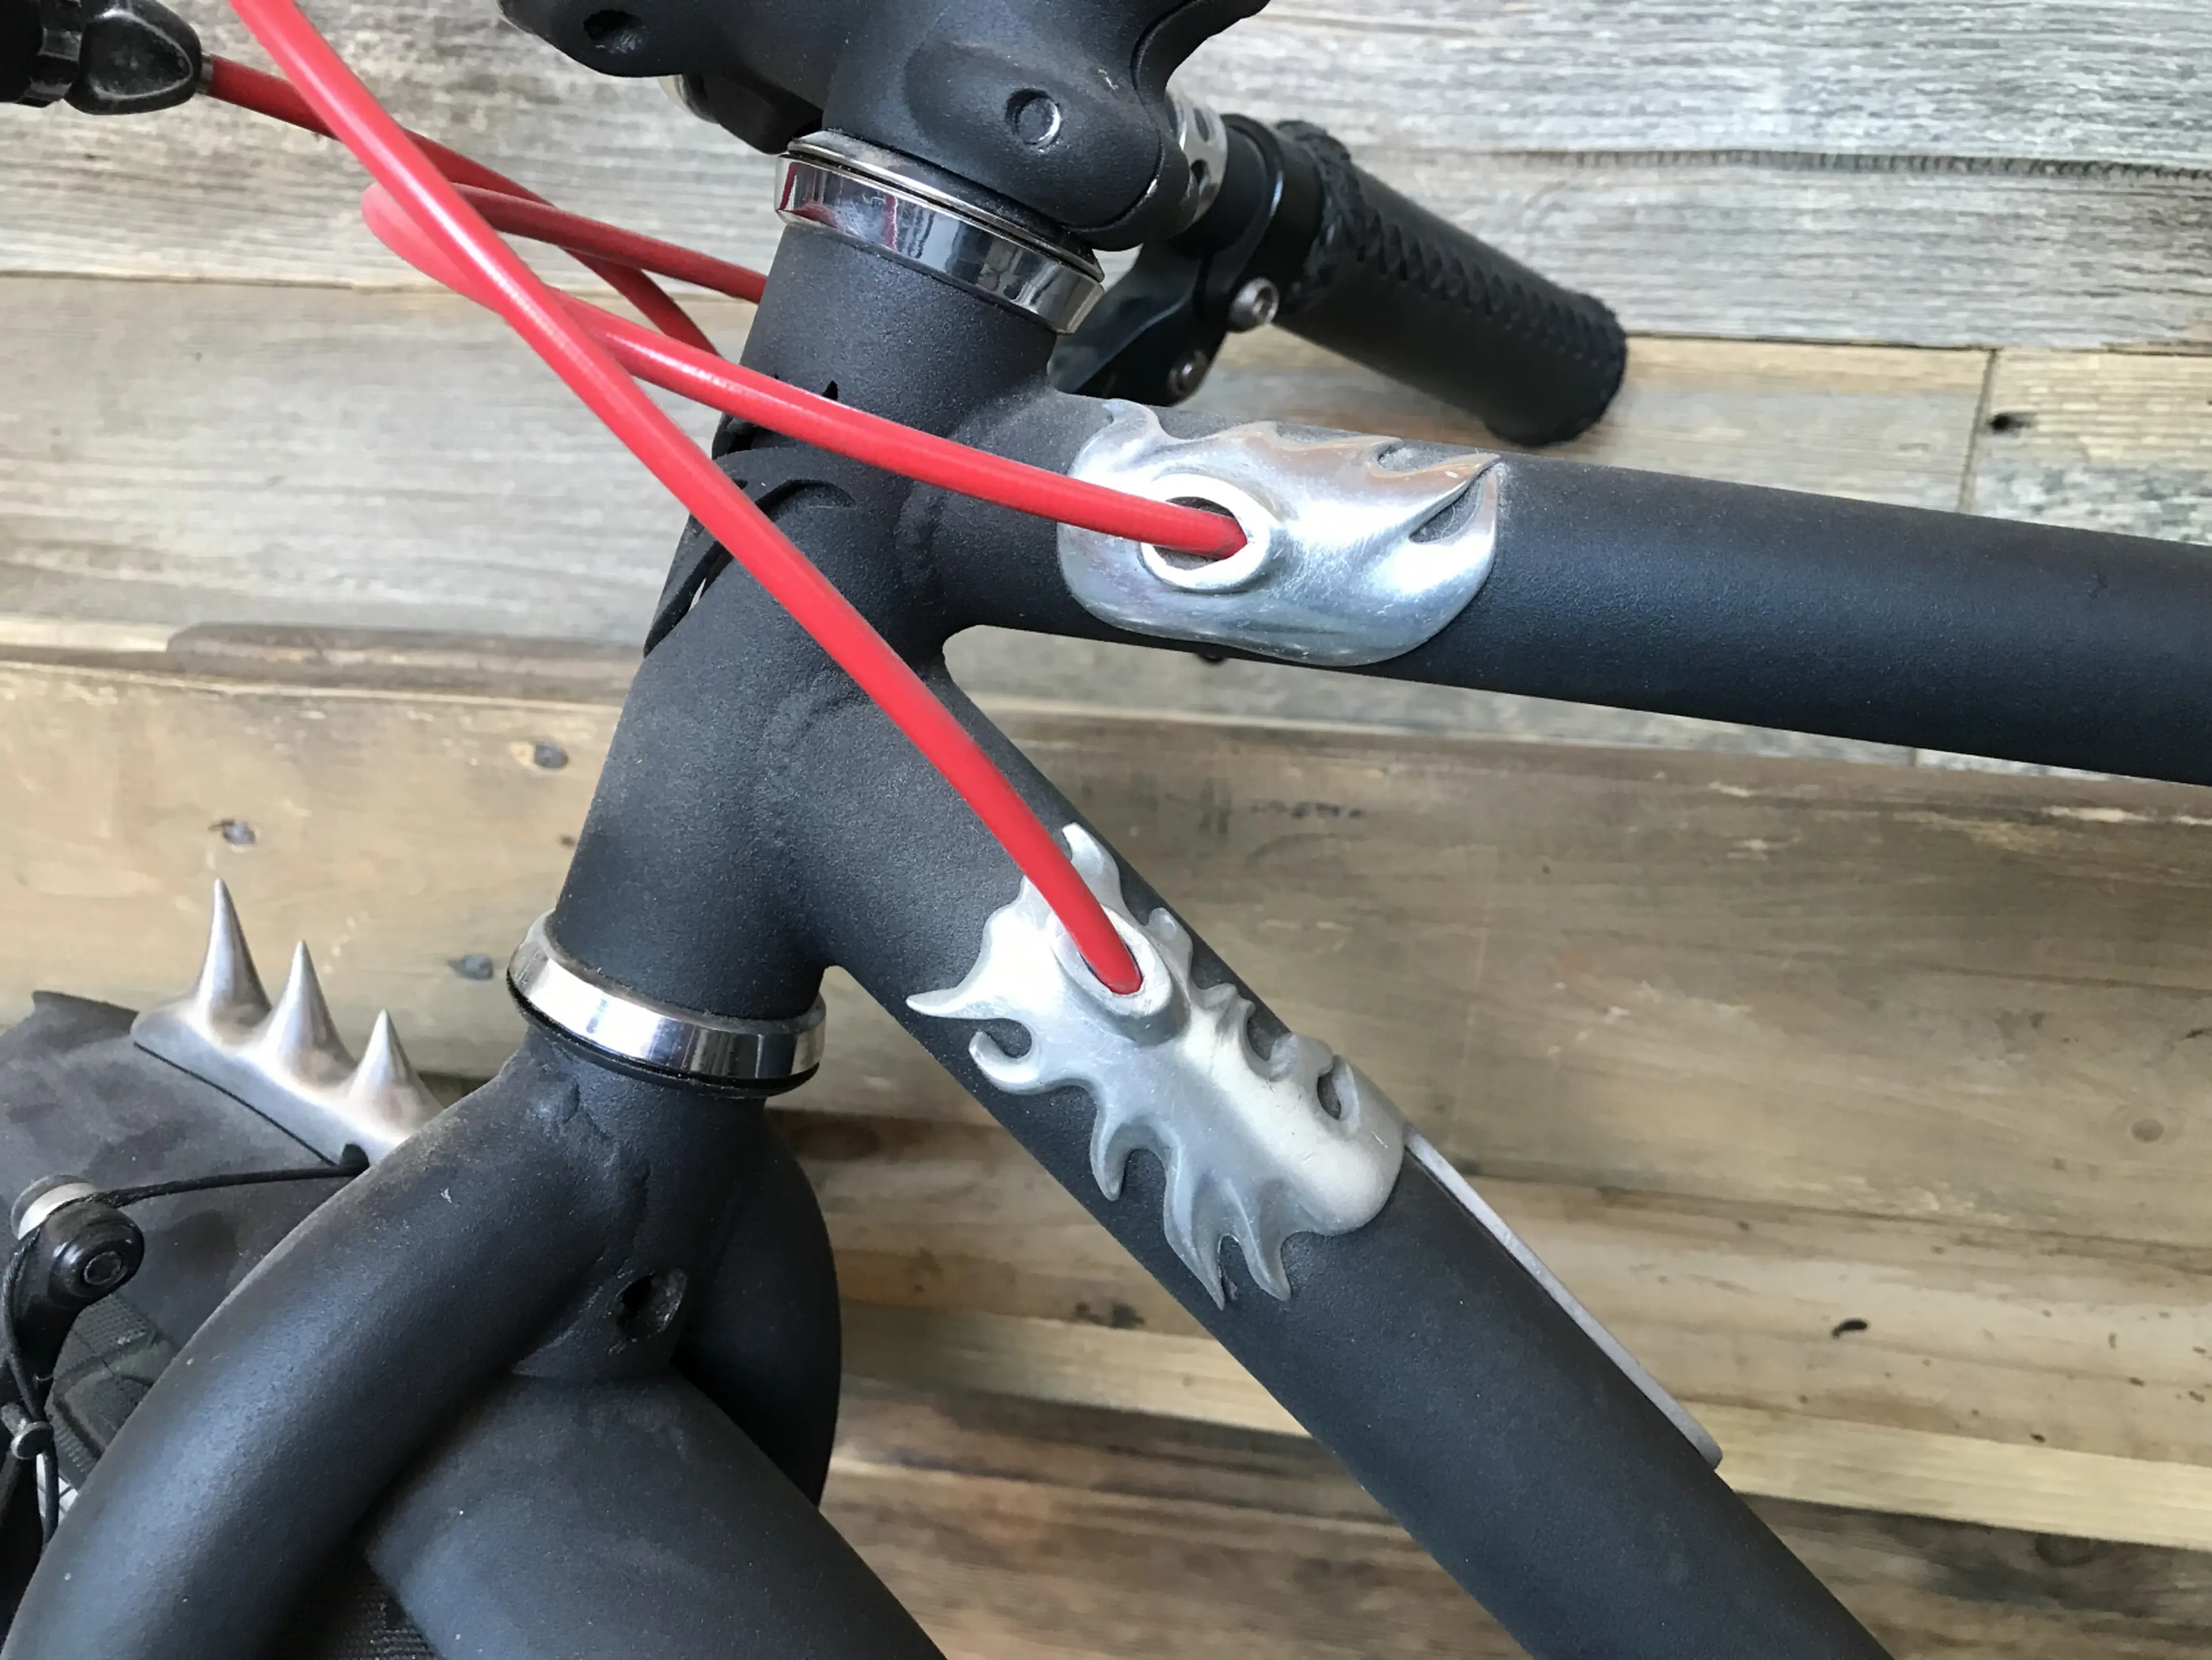 8. Bicicleta custom Seth's red demon